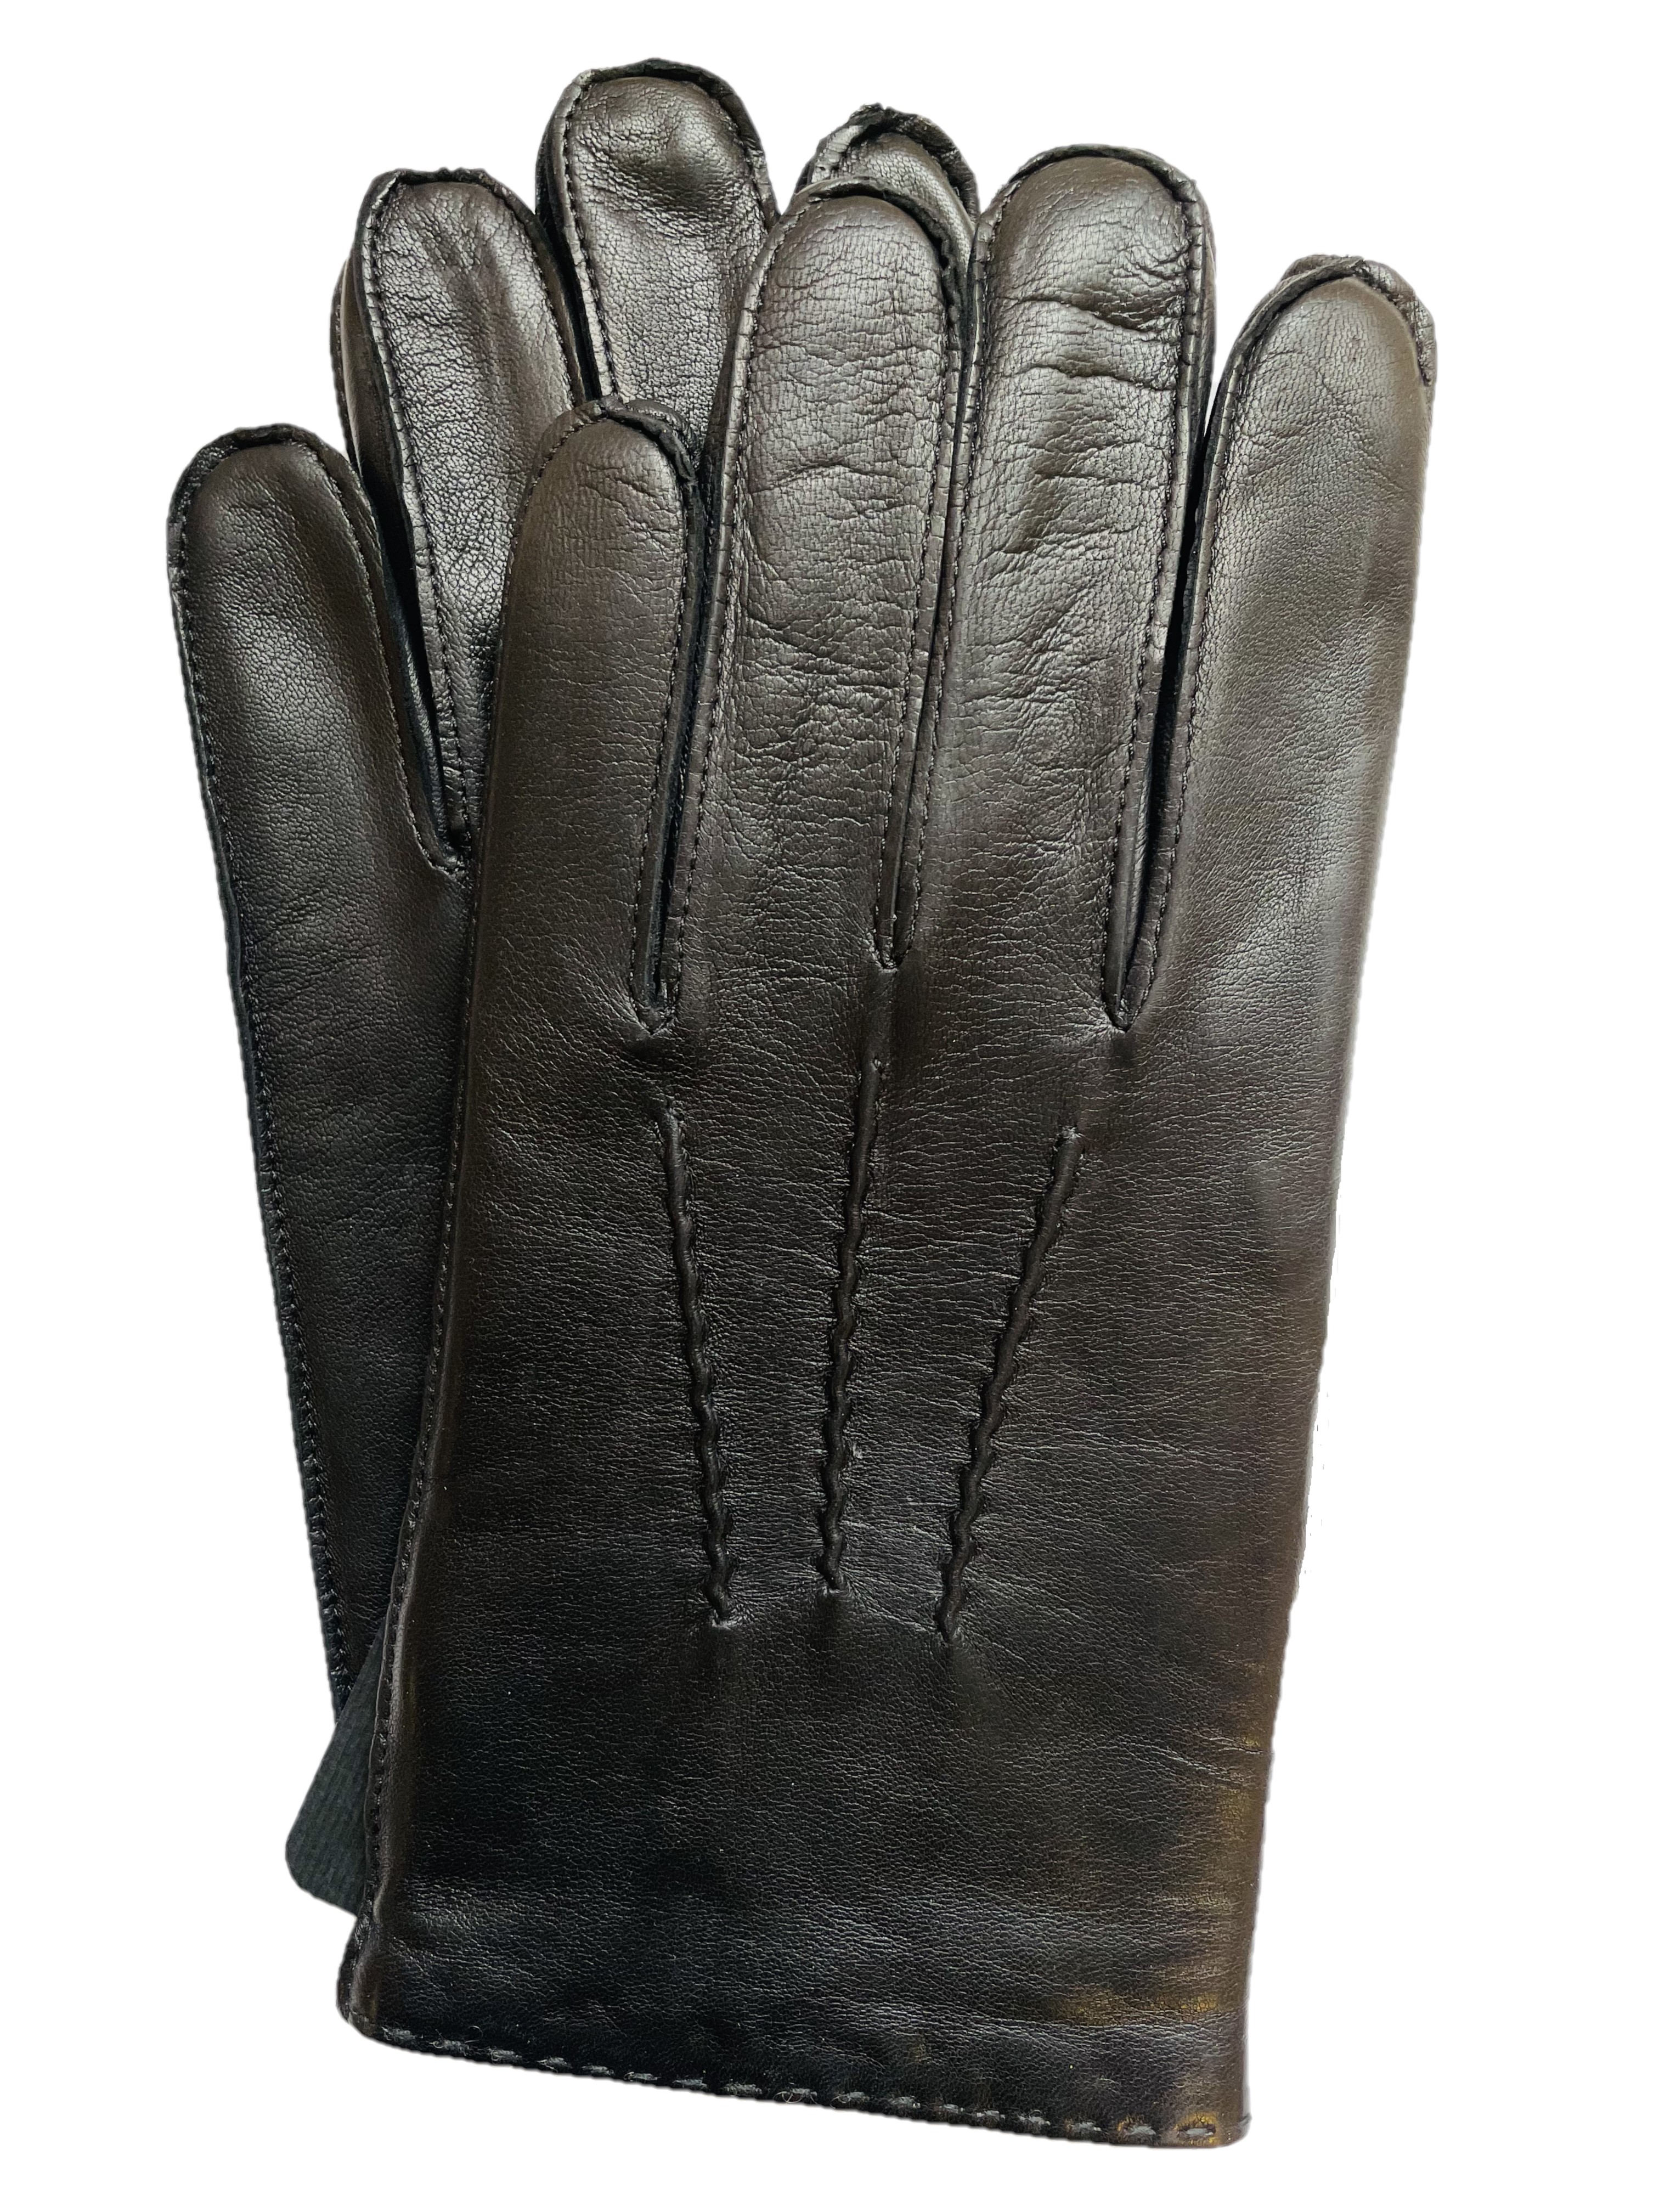 Handsewn Lambskin Black Dress Gloves